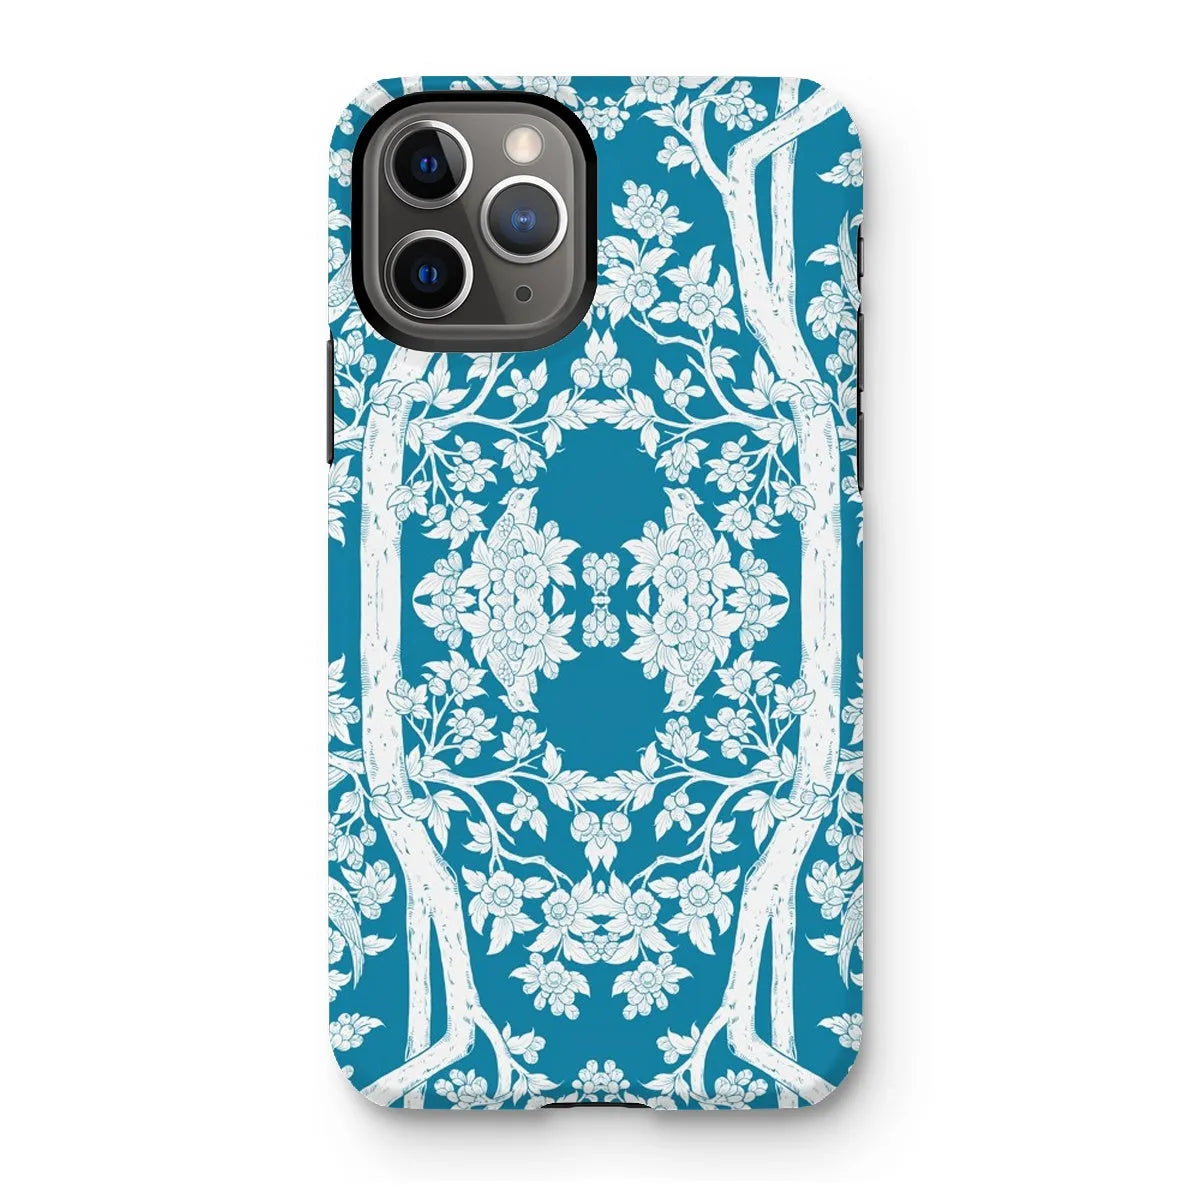 Aviary Blue Aesthetic Pattern Art Phone Case - Iphone 11 Pro / Matte - Mobile Phone Cases - Aesthetic Art